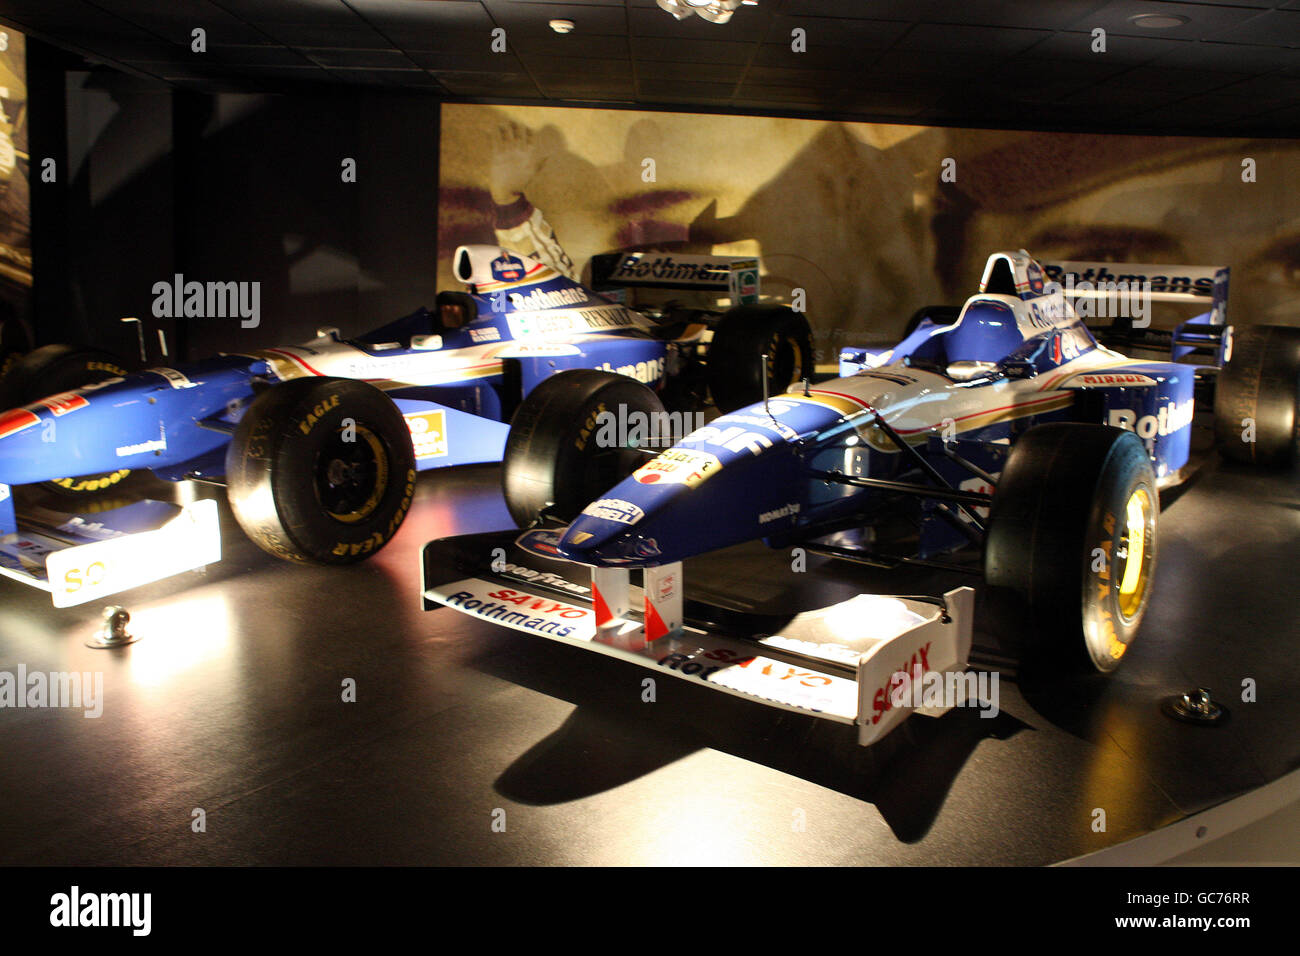 File:Monaco GP 1996 winners trophy Honda Collection Hall.jpg - Wikimedia  Commons